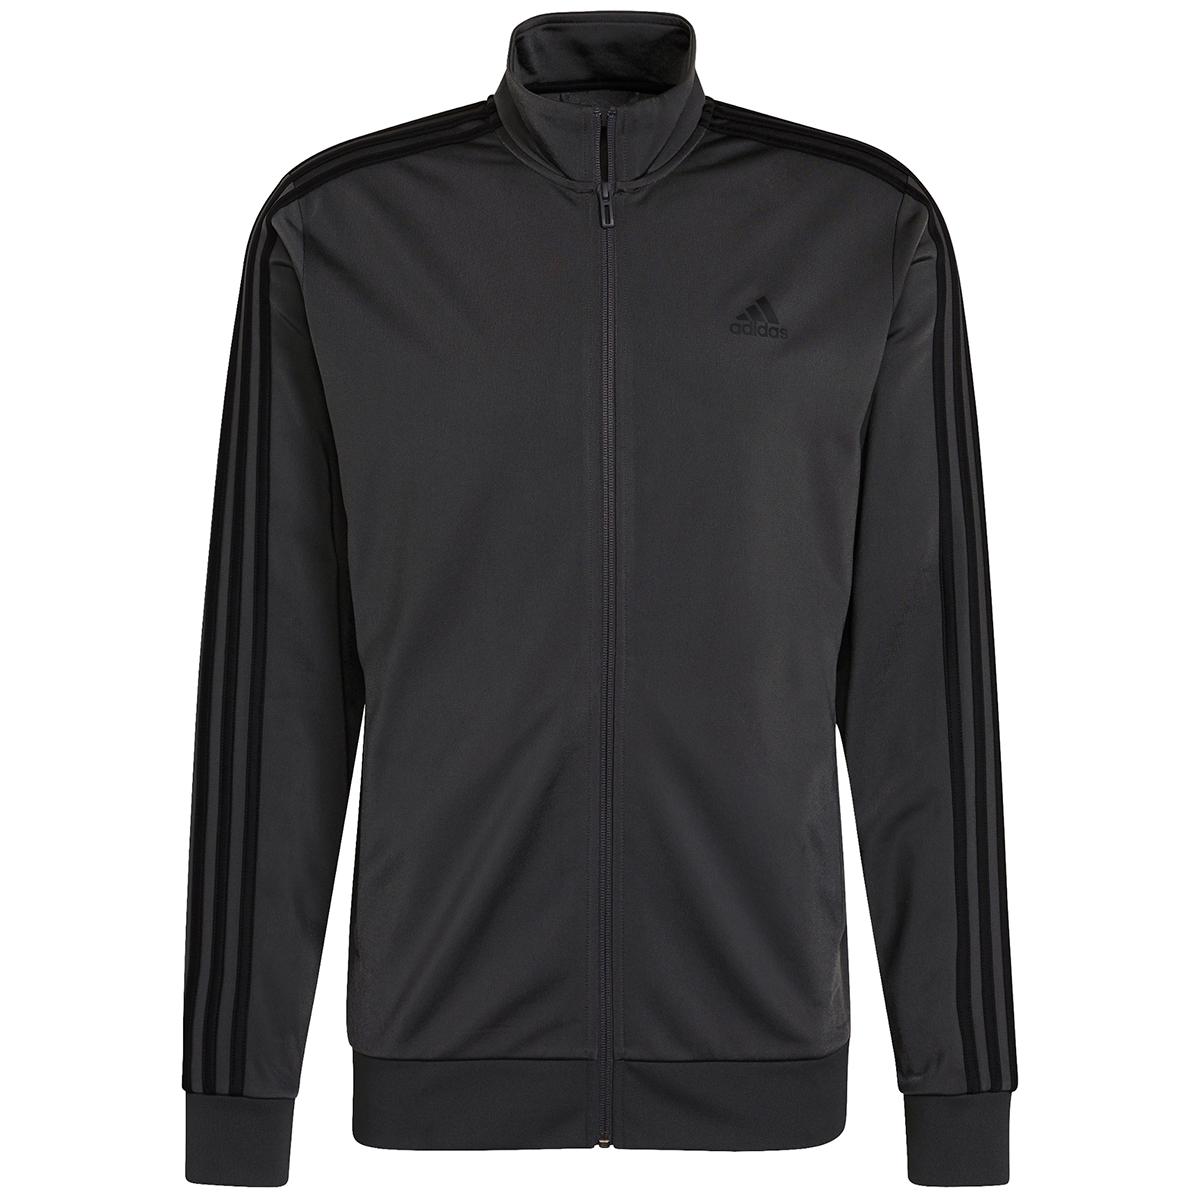 Adidas Men's Essentials Warm-Up 3-Stripes Track Jacket